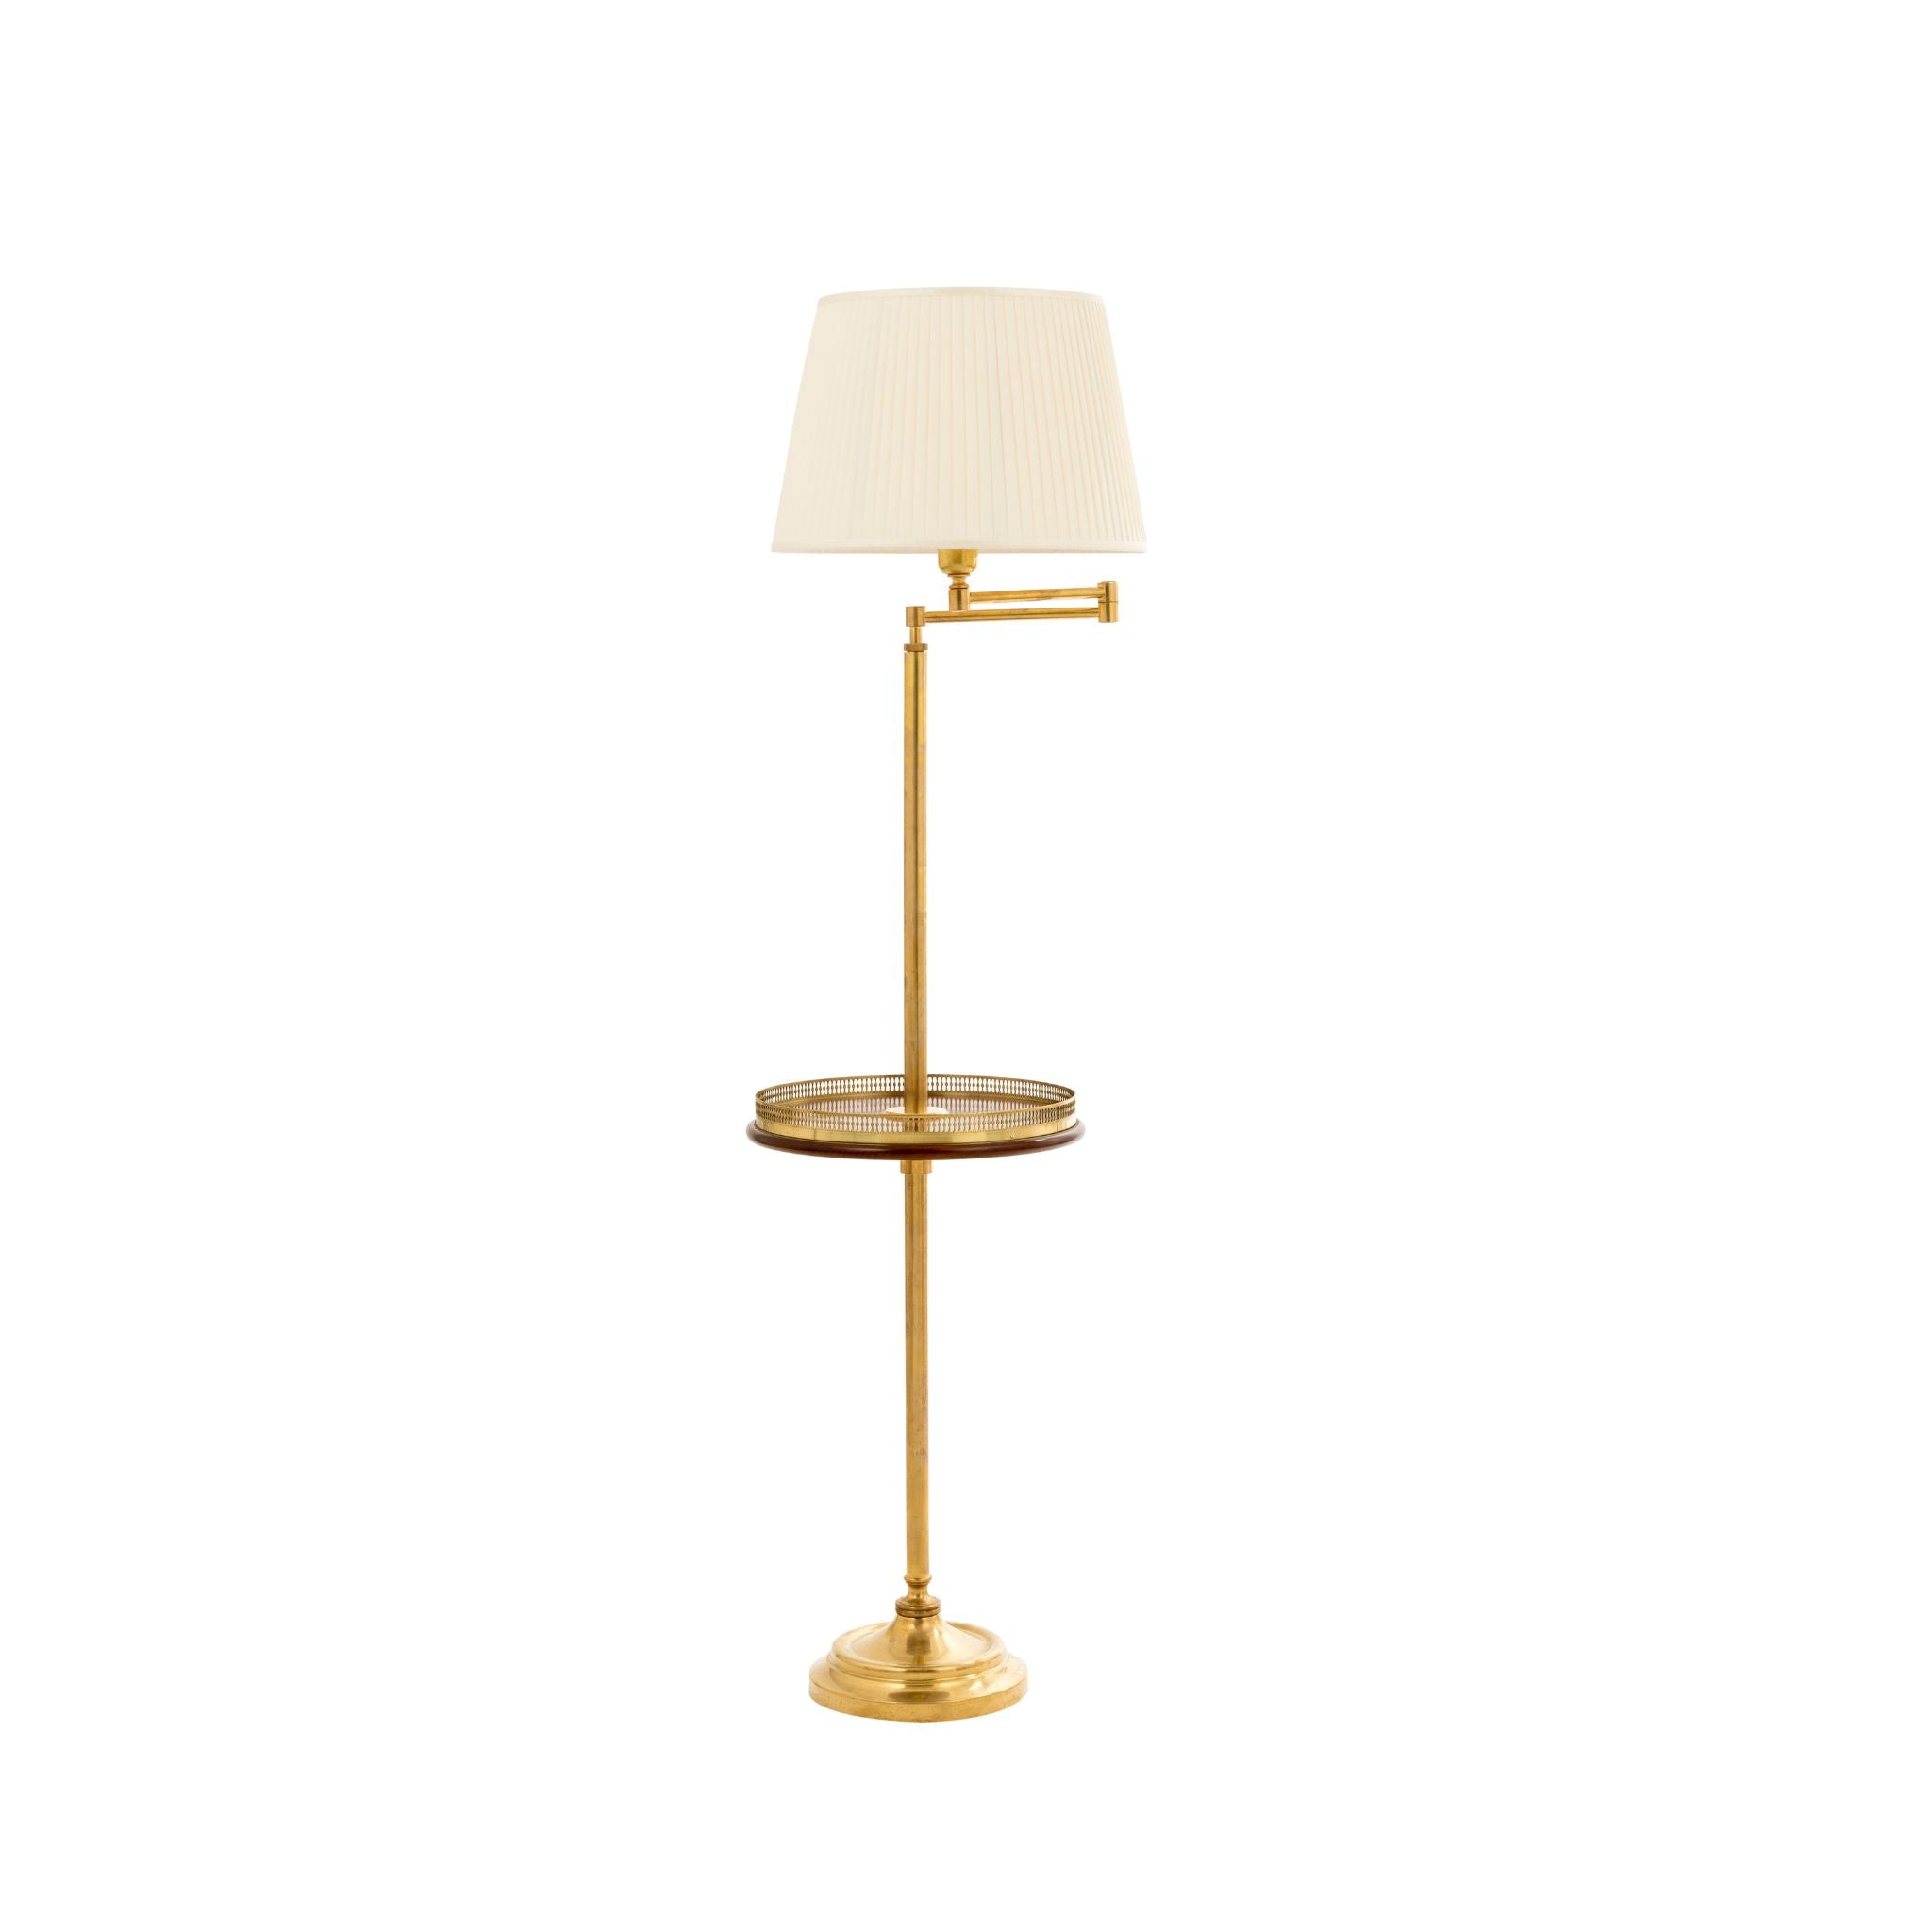 Studio brass adjustable floor lamp with wood table - ilbronzetto